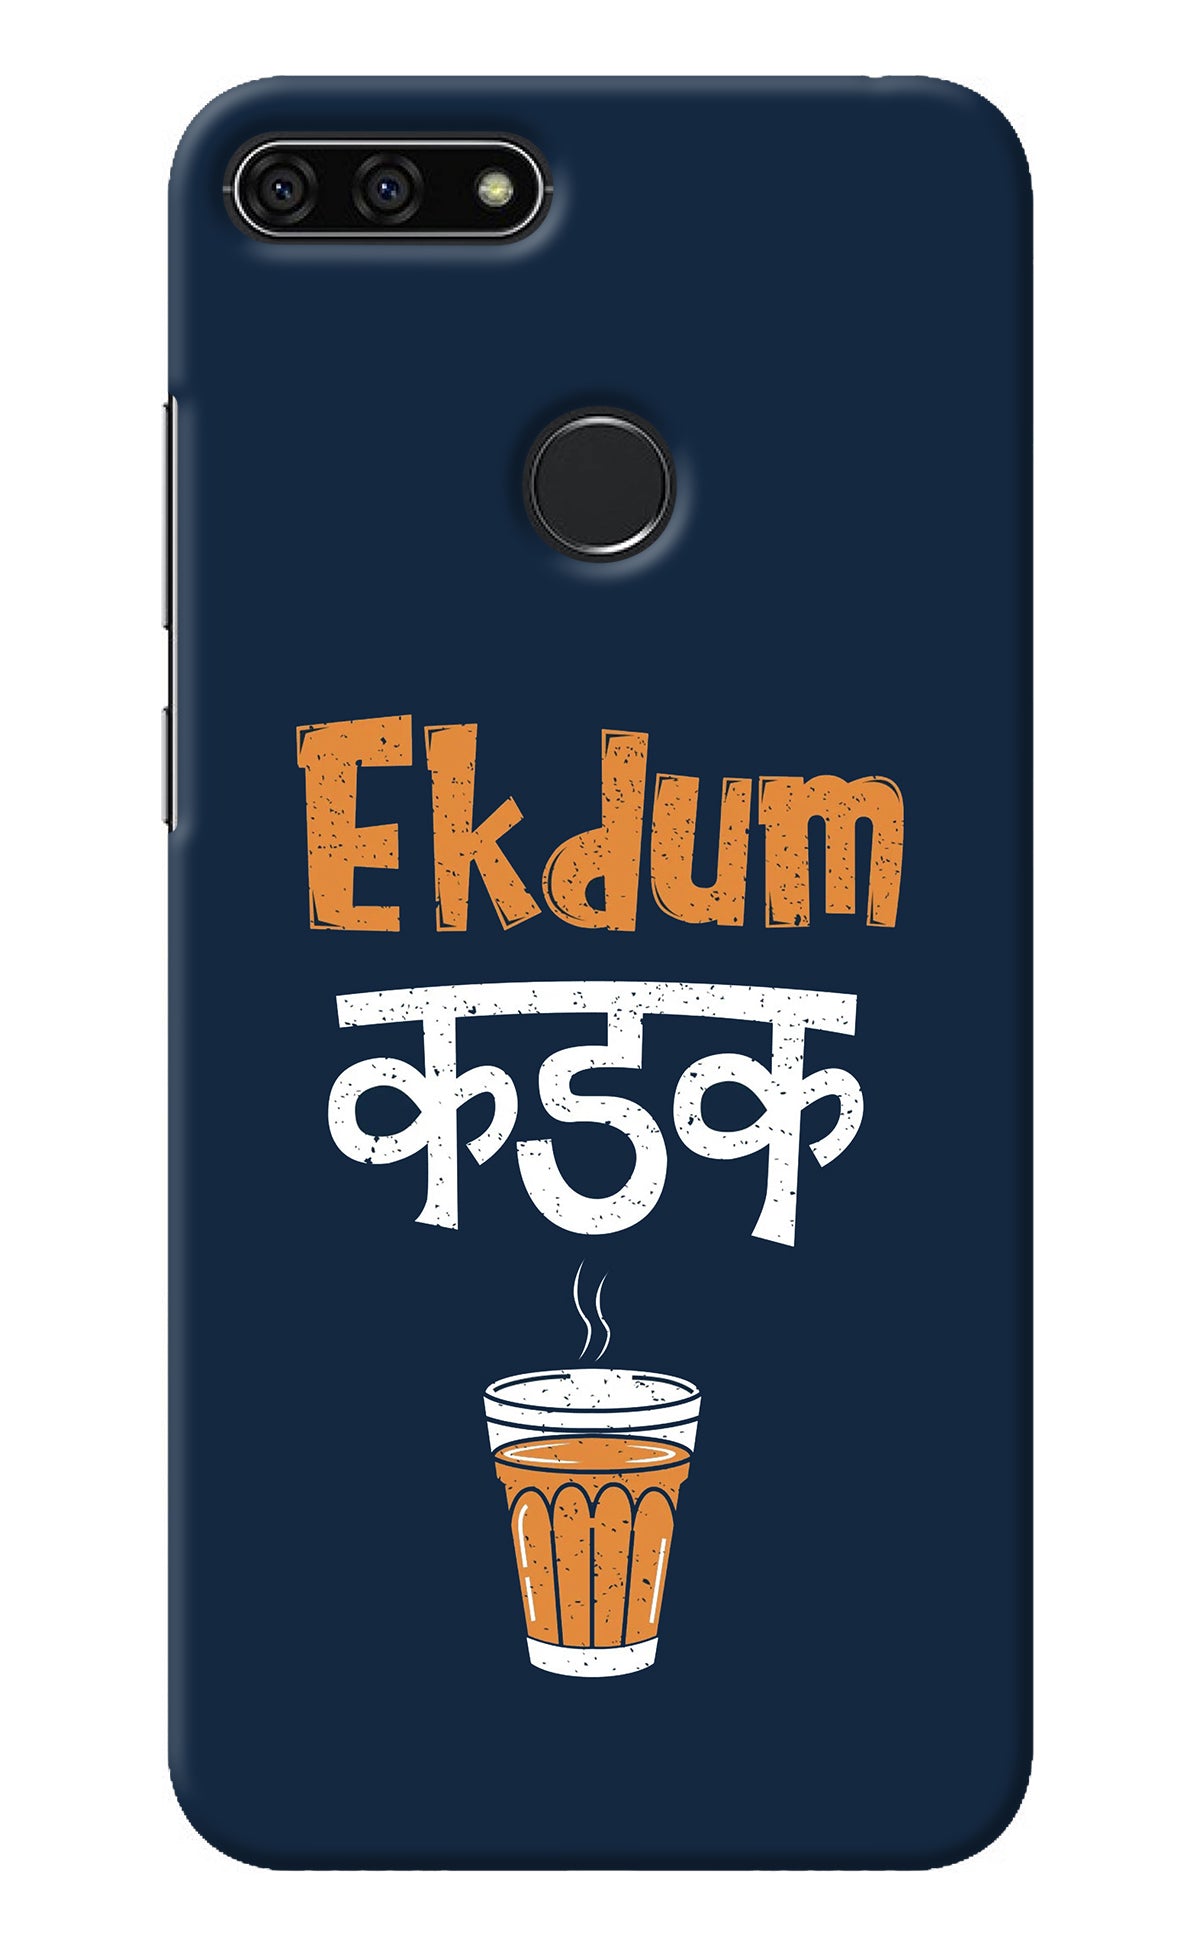 Ekdum Kadak Chai Honor 7A Back Cover